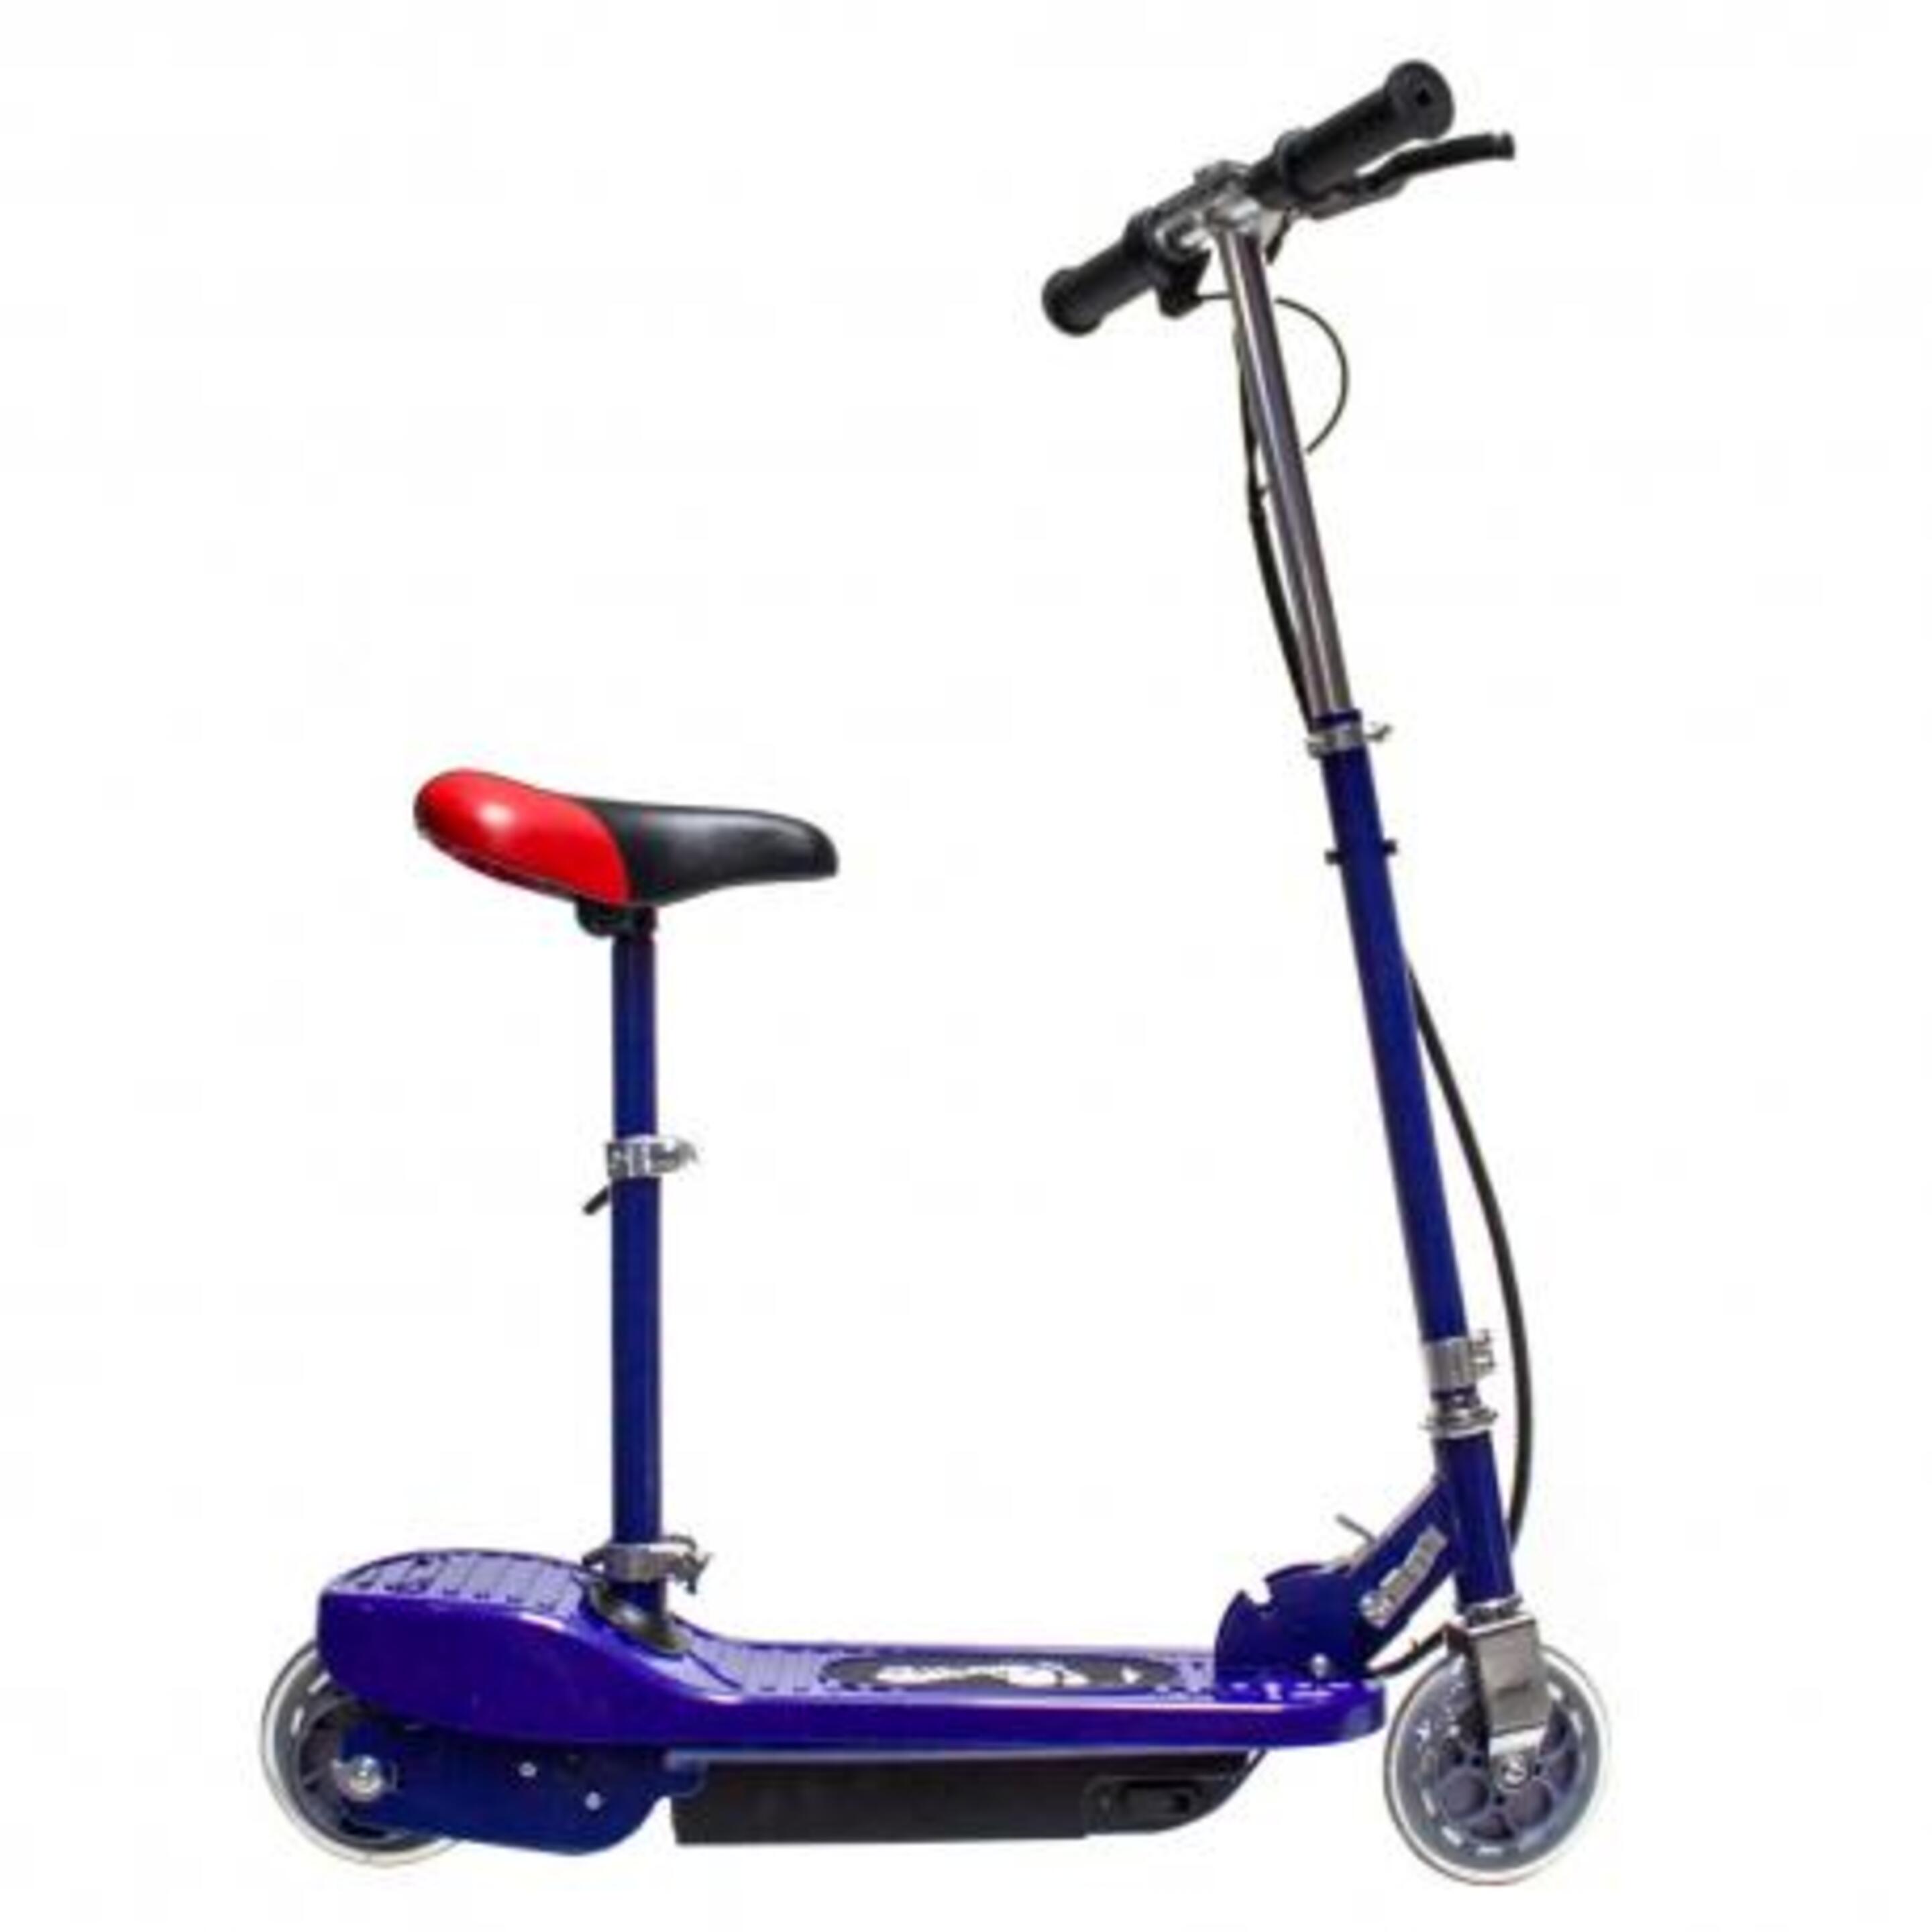 Gran-scooter Cr-byke Seat - azul - 